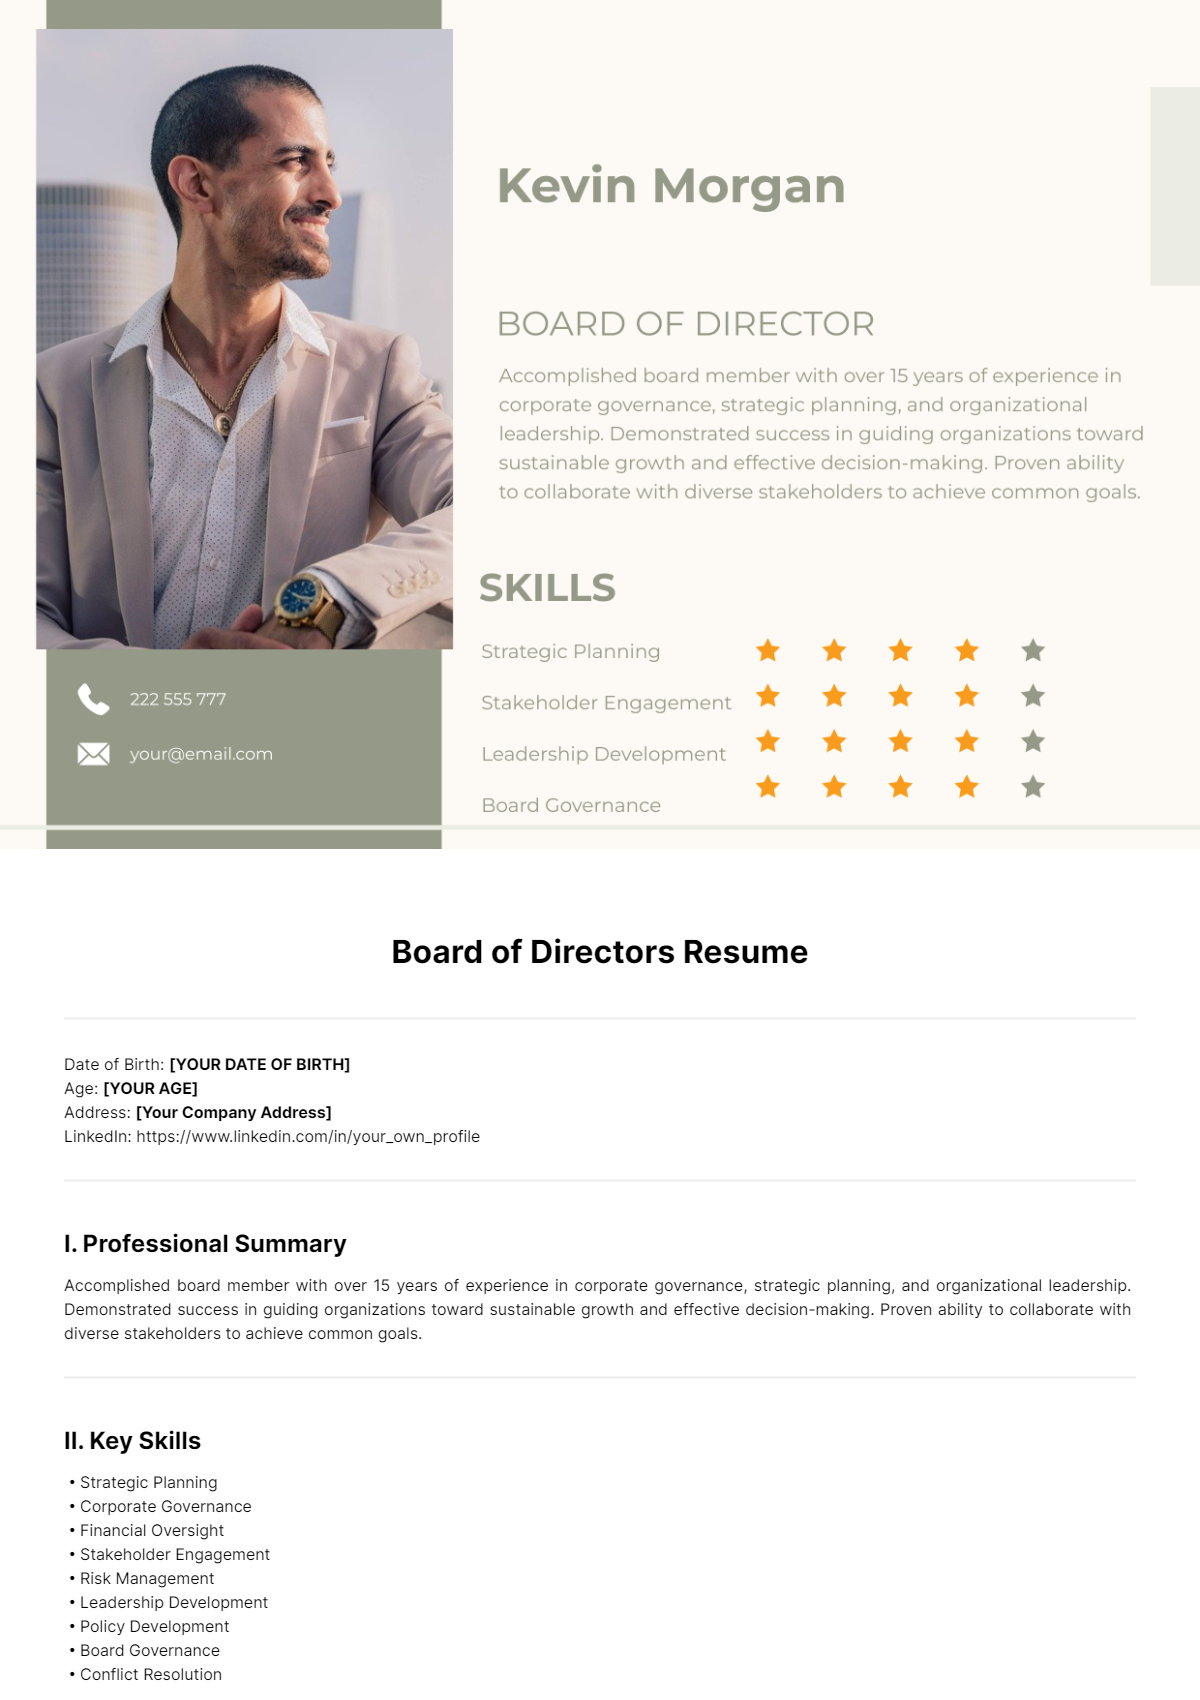 Board of Directors Resume Template